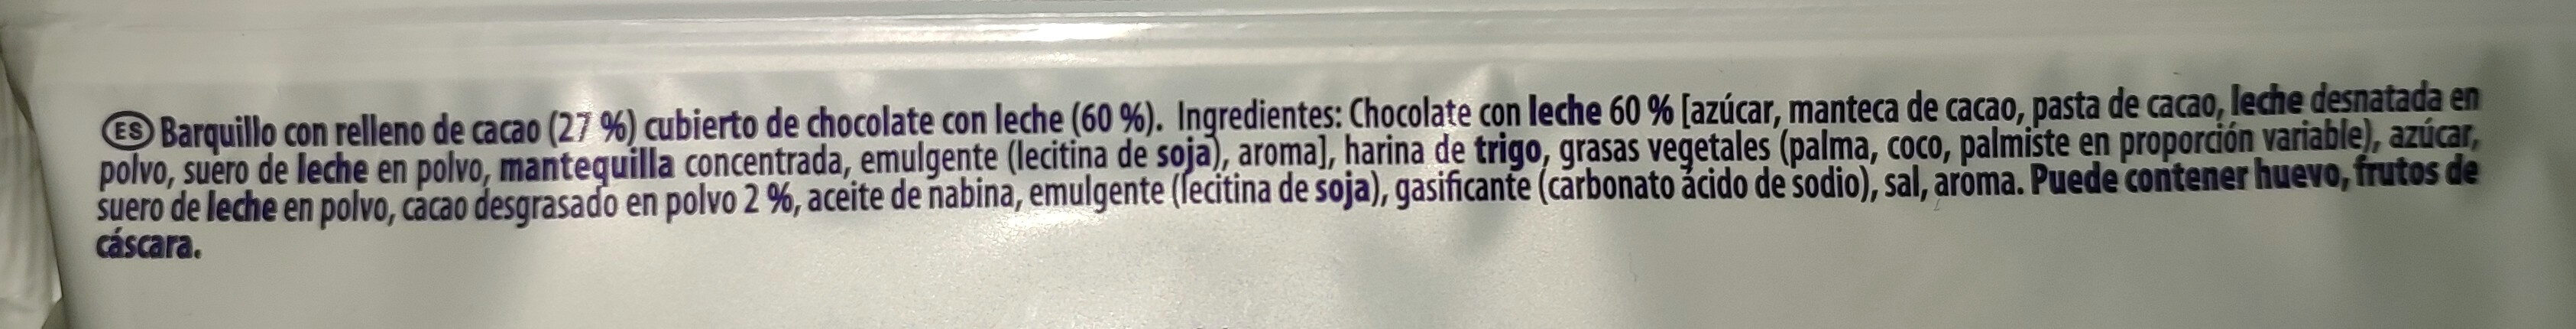 Choco wafer - Ingredients - es